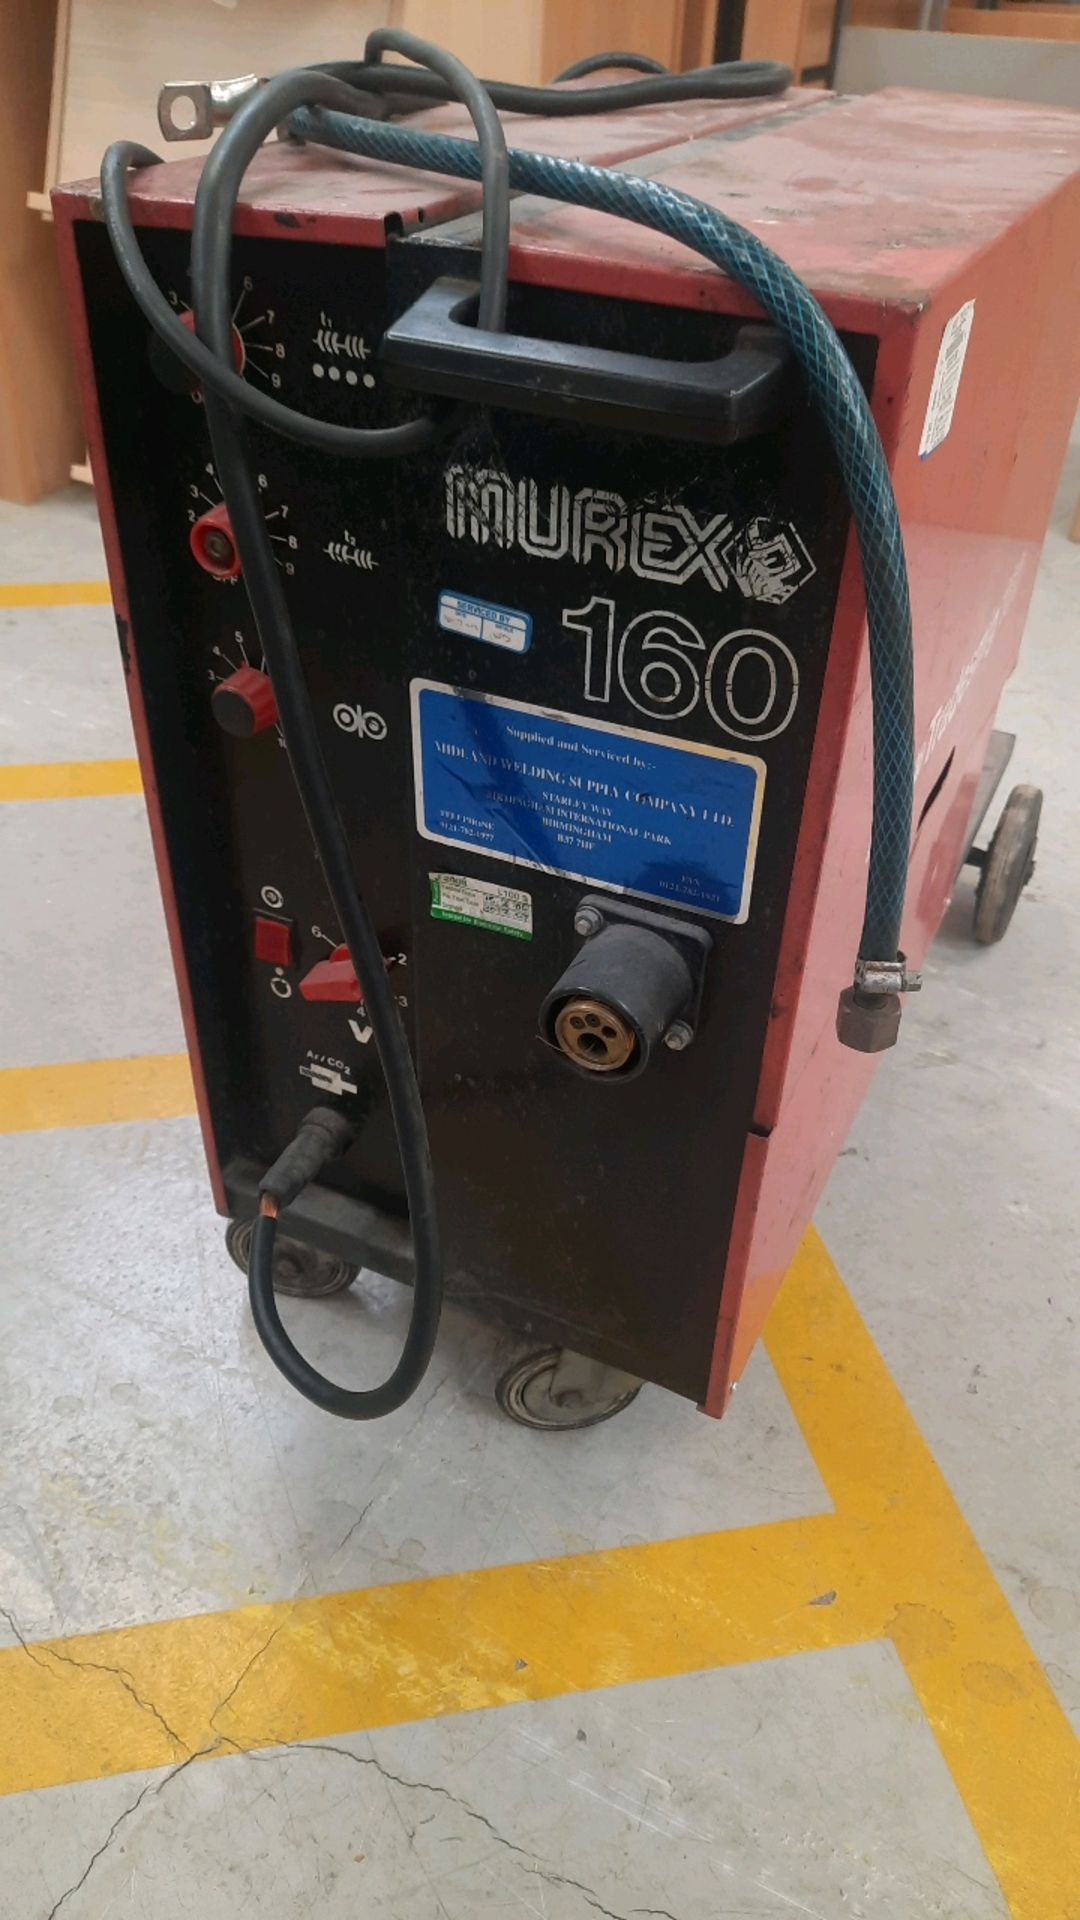 Murex Tradesmig 160 Welding Machine - Image 2 of 6